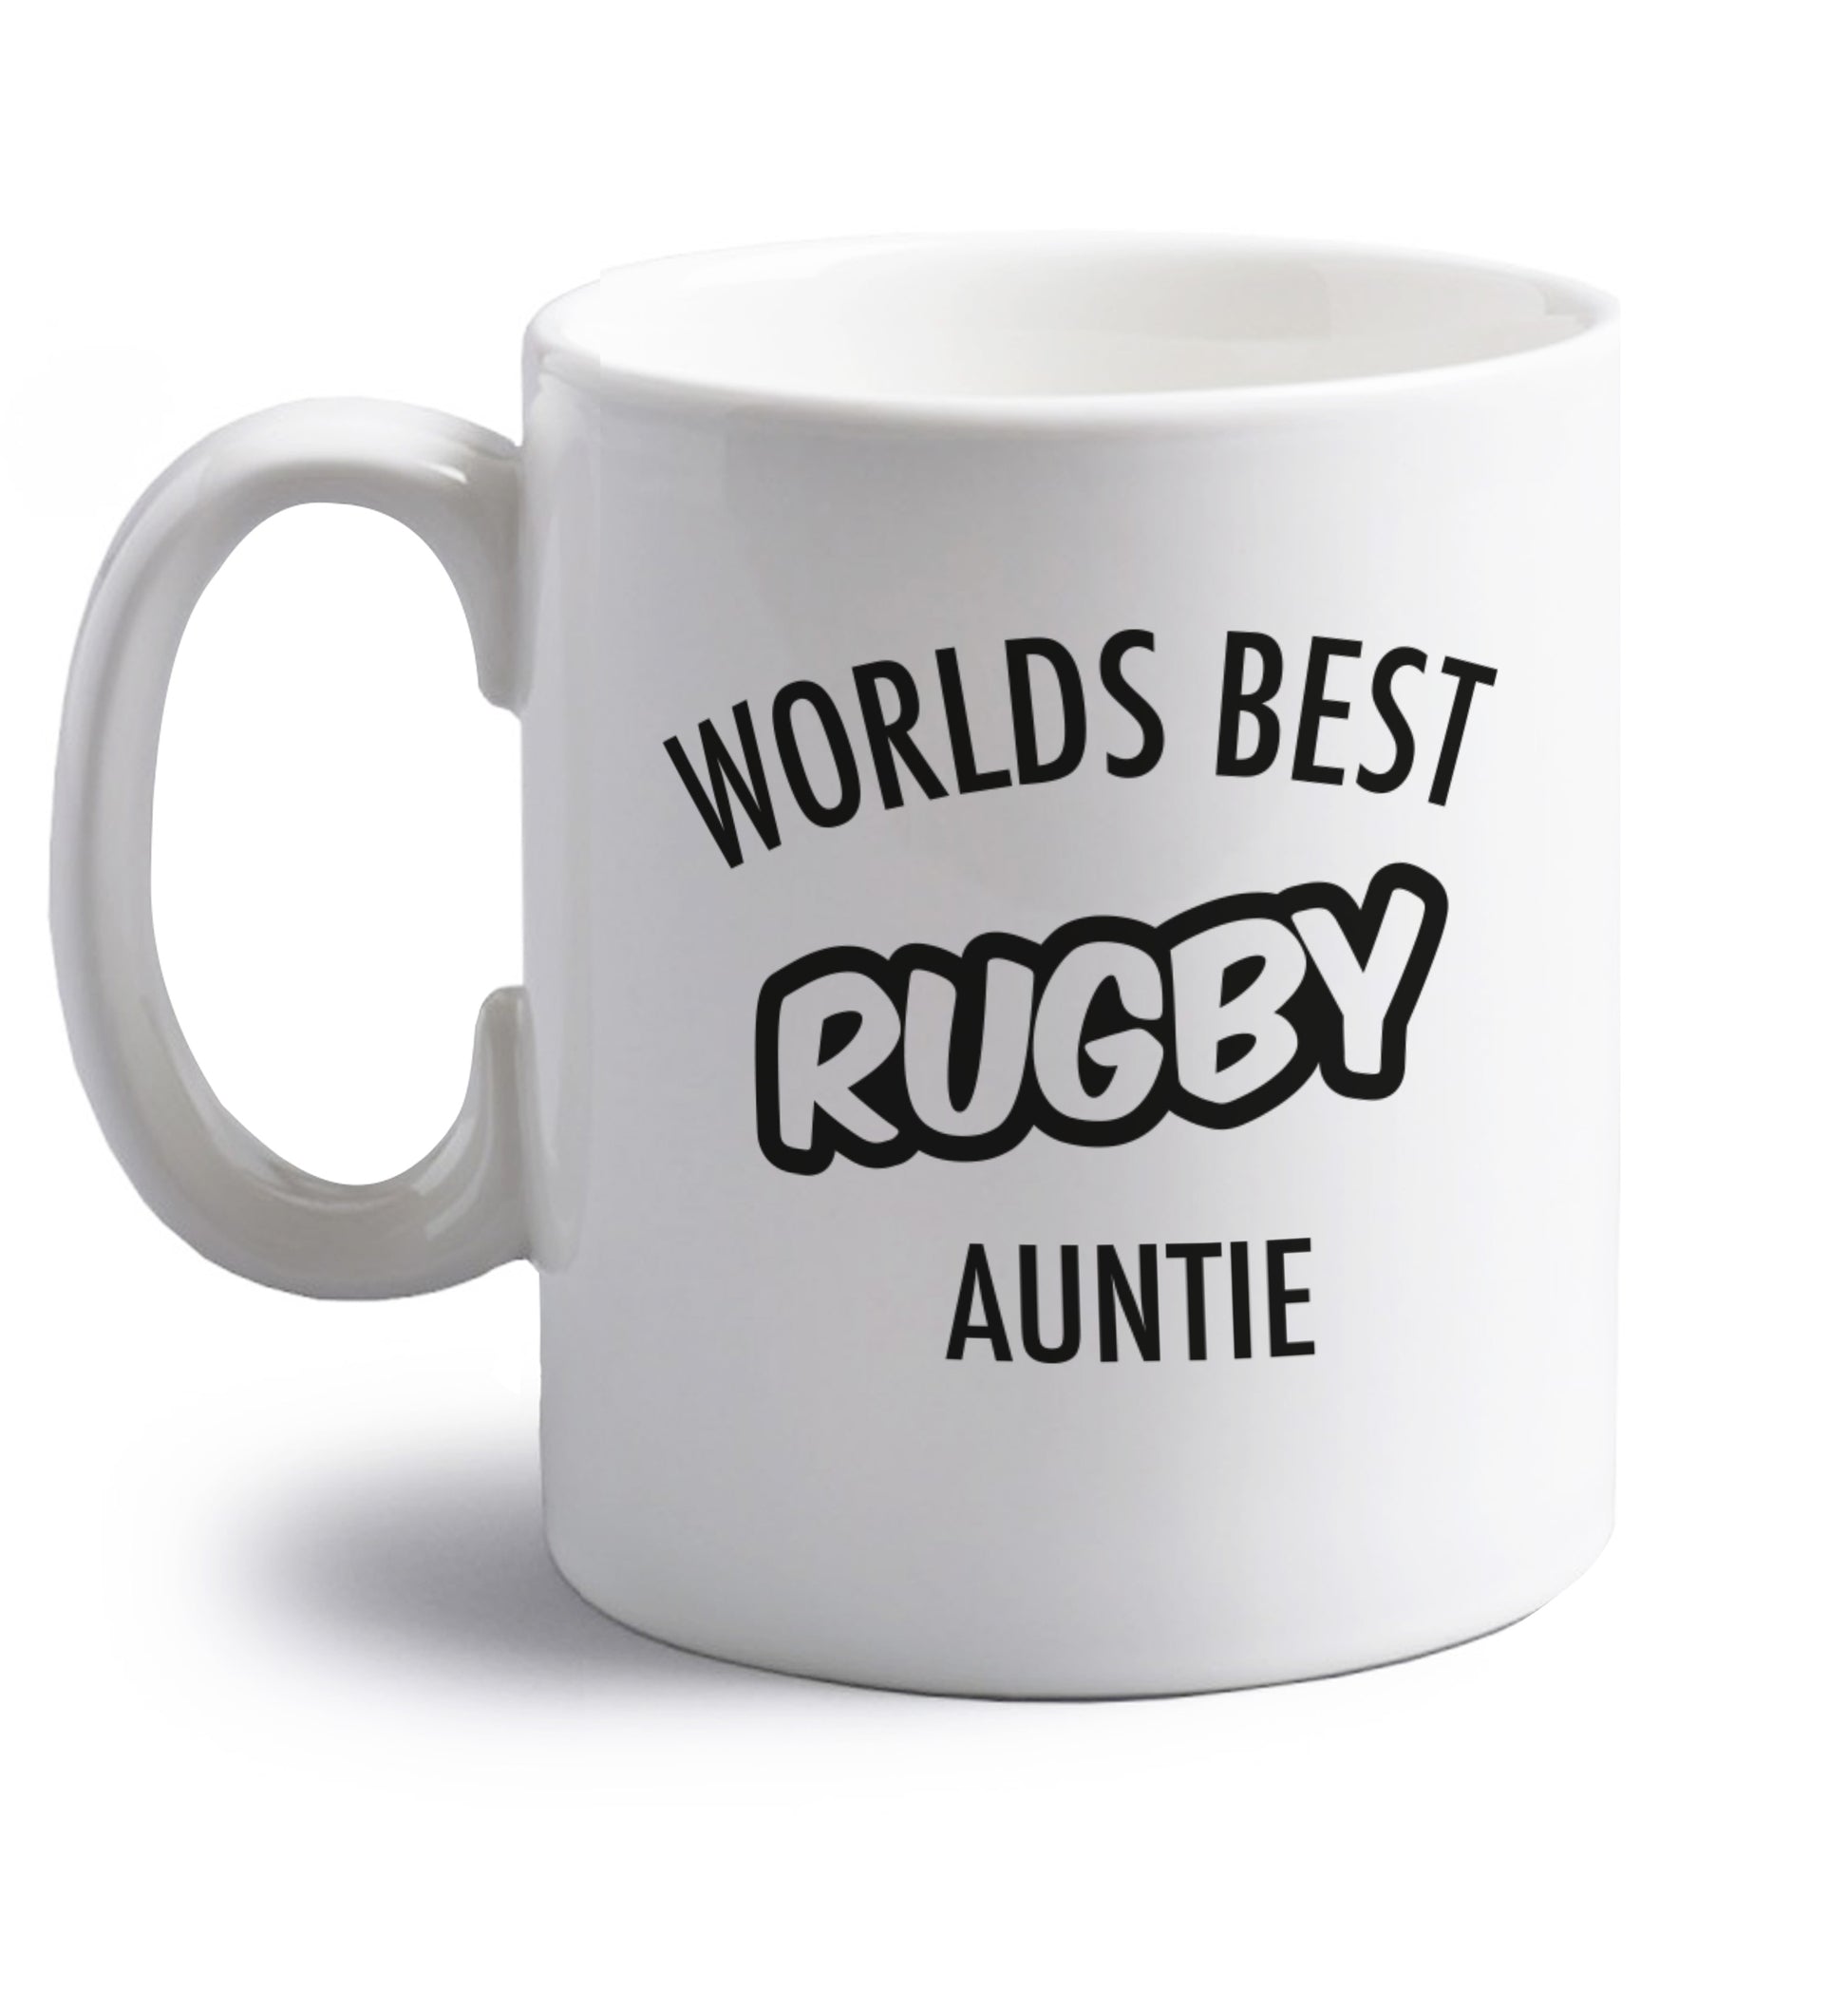 Worlds best rugby auntie right handed white ceramic mug 